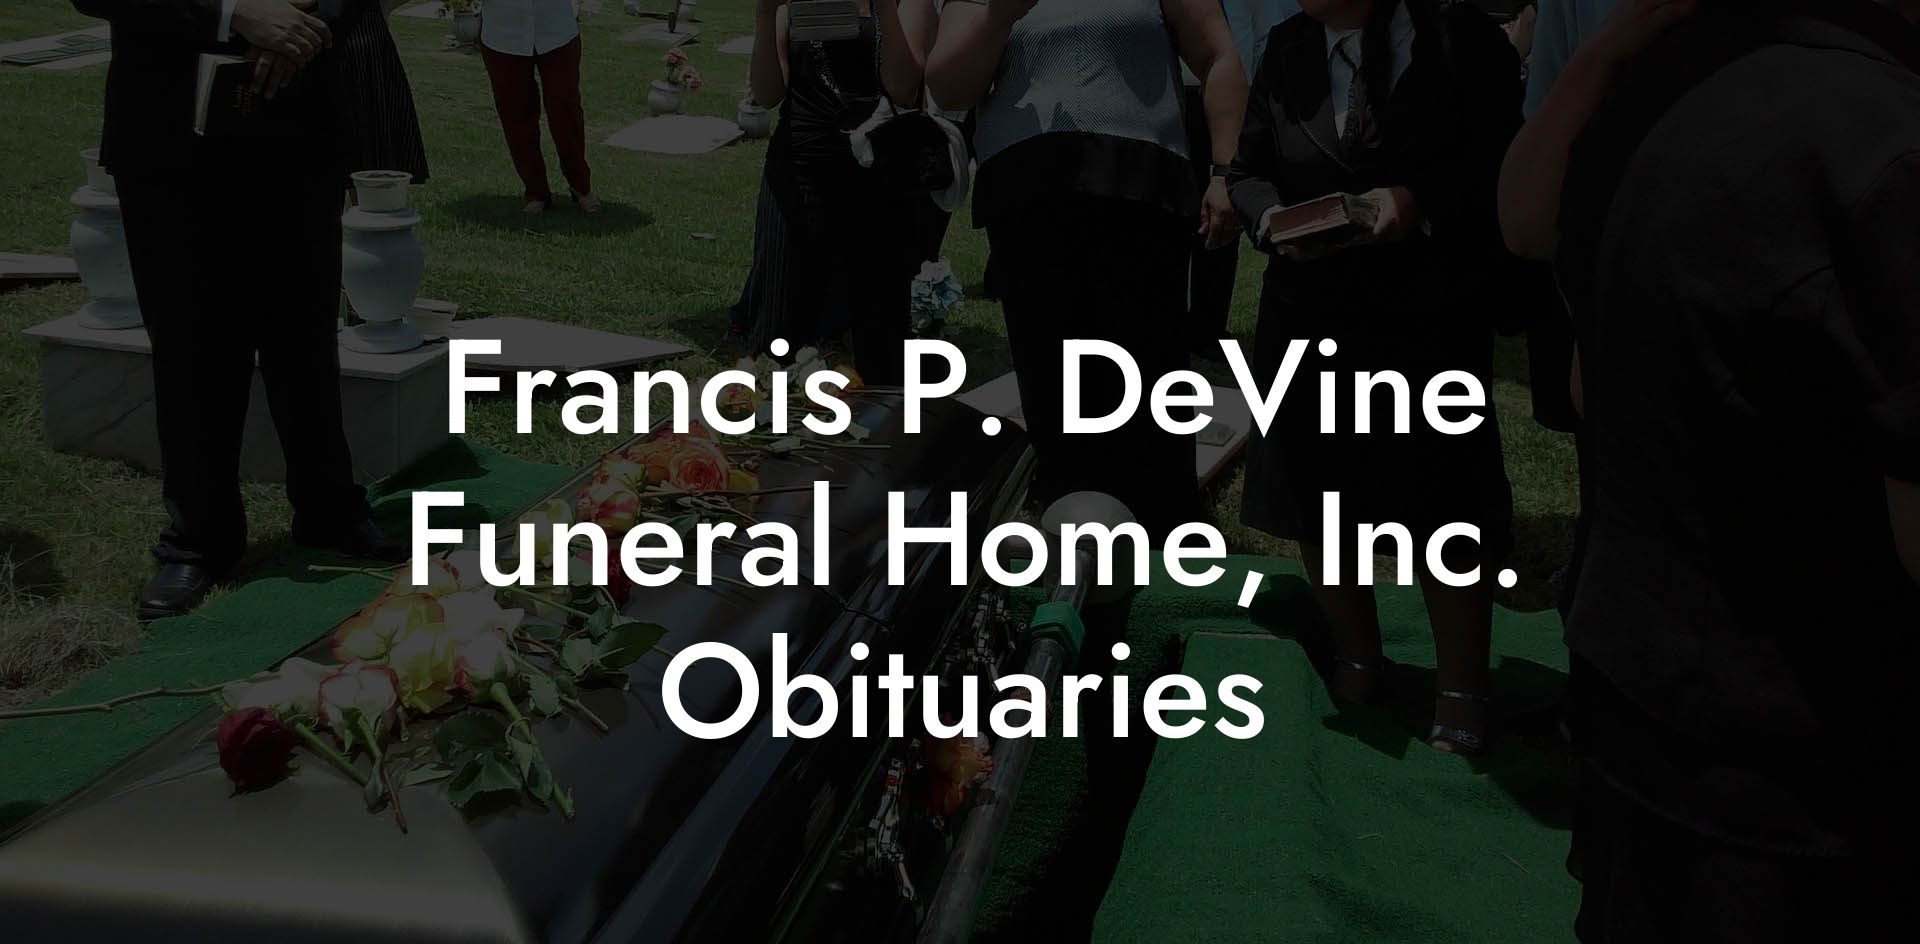 Francis P. DeVine Funeral Home, Inc. Obituaries